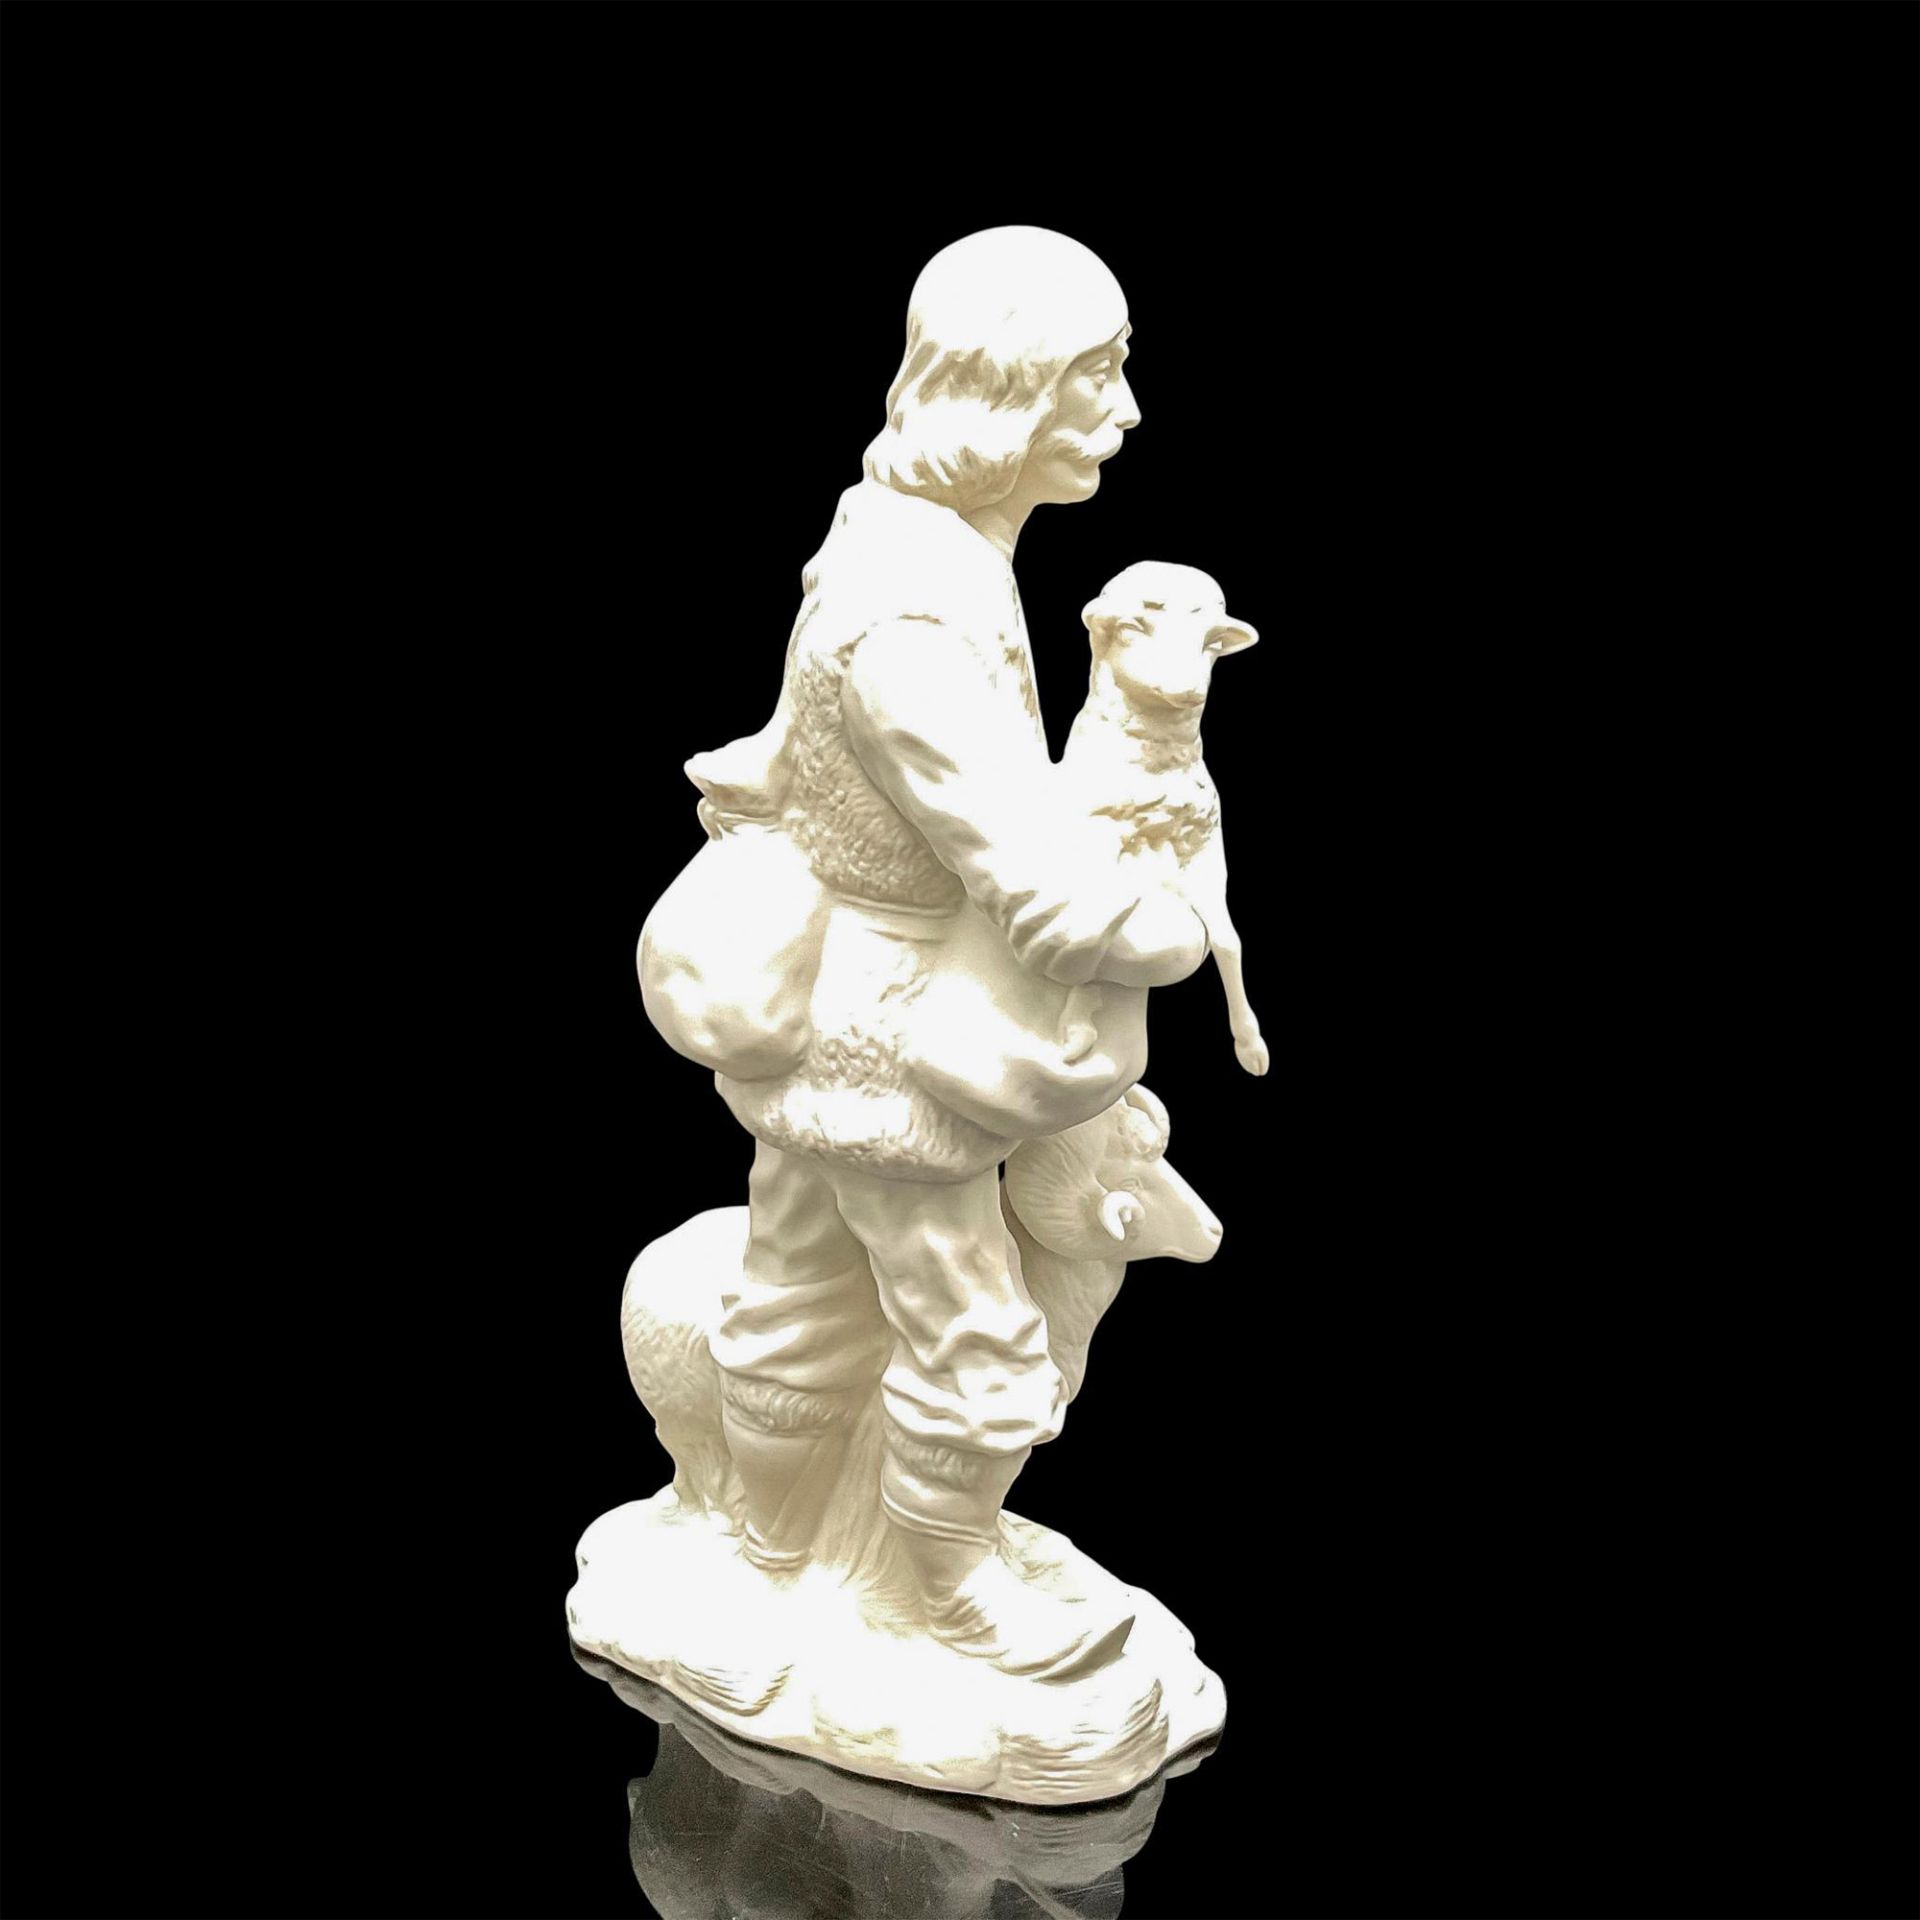 Boehm Christian Era Collection Figurine, Young Shepherd - Image 2 of 4